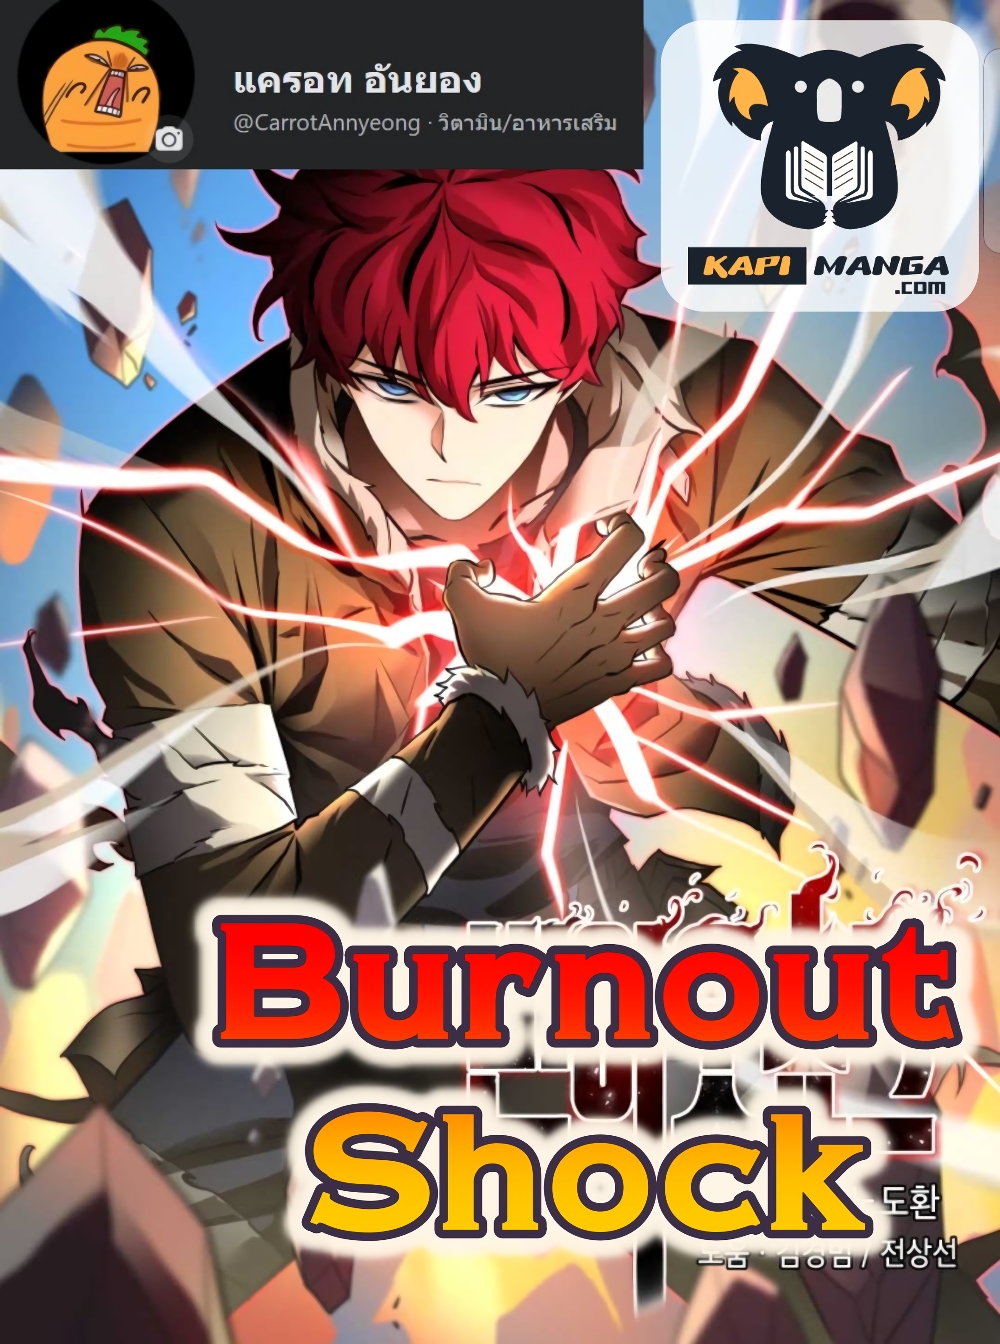 Burnout Shock 15 01